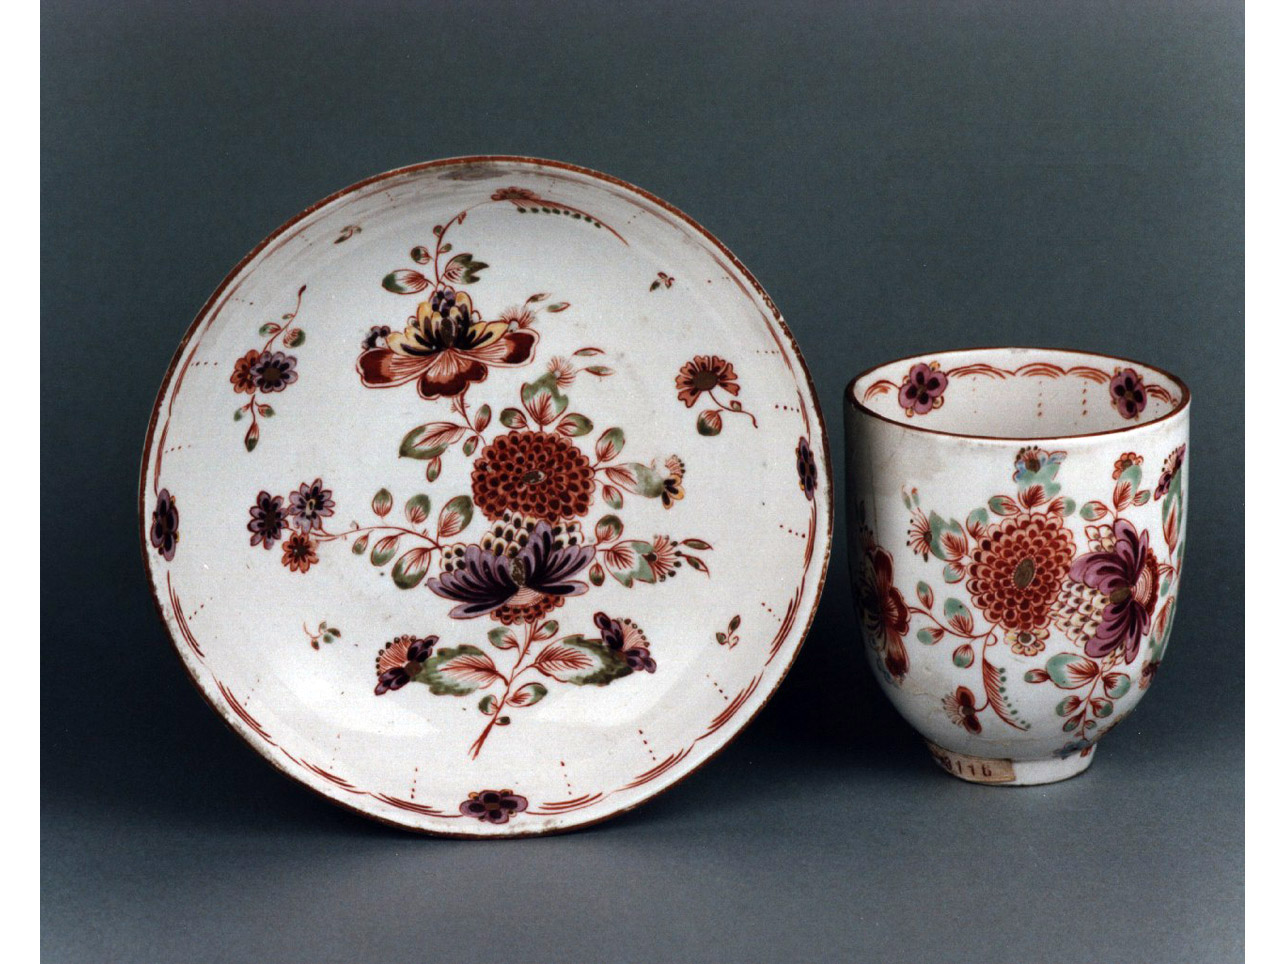 motivi decorativi floreali (tazza) - manifattura di Hoechst (sec. XVIII)